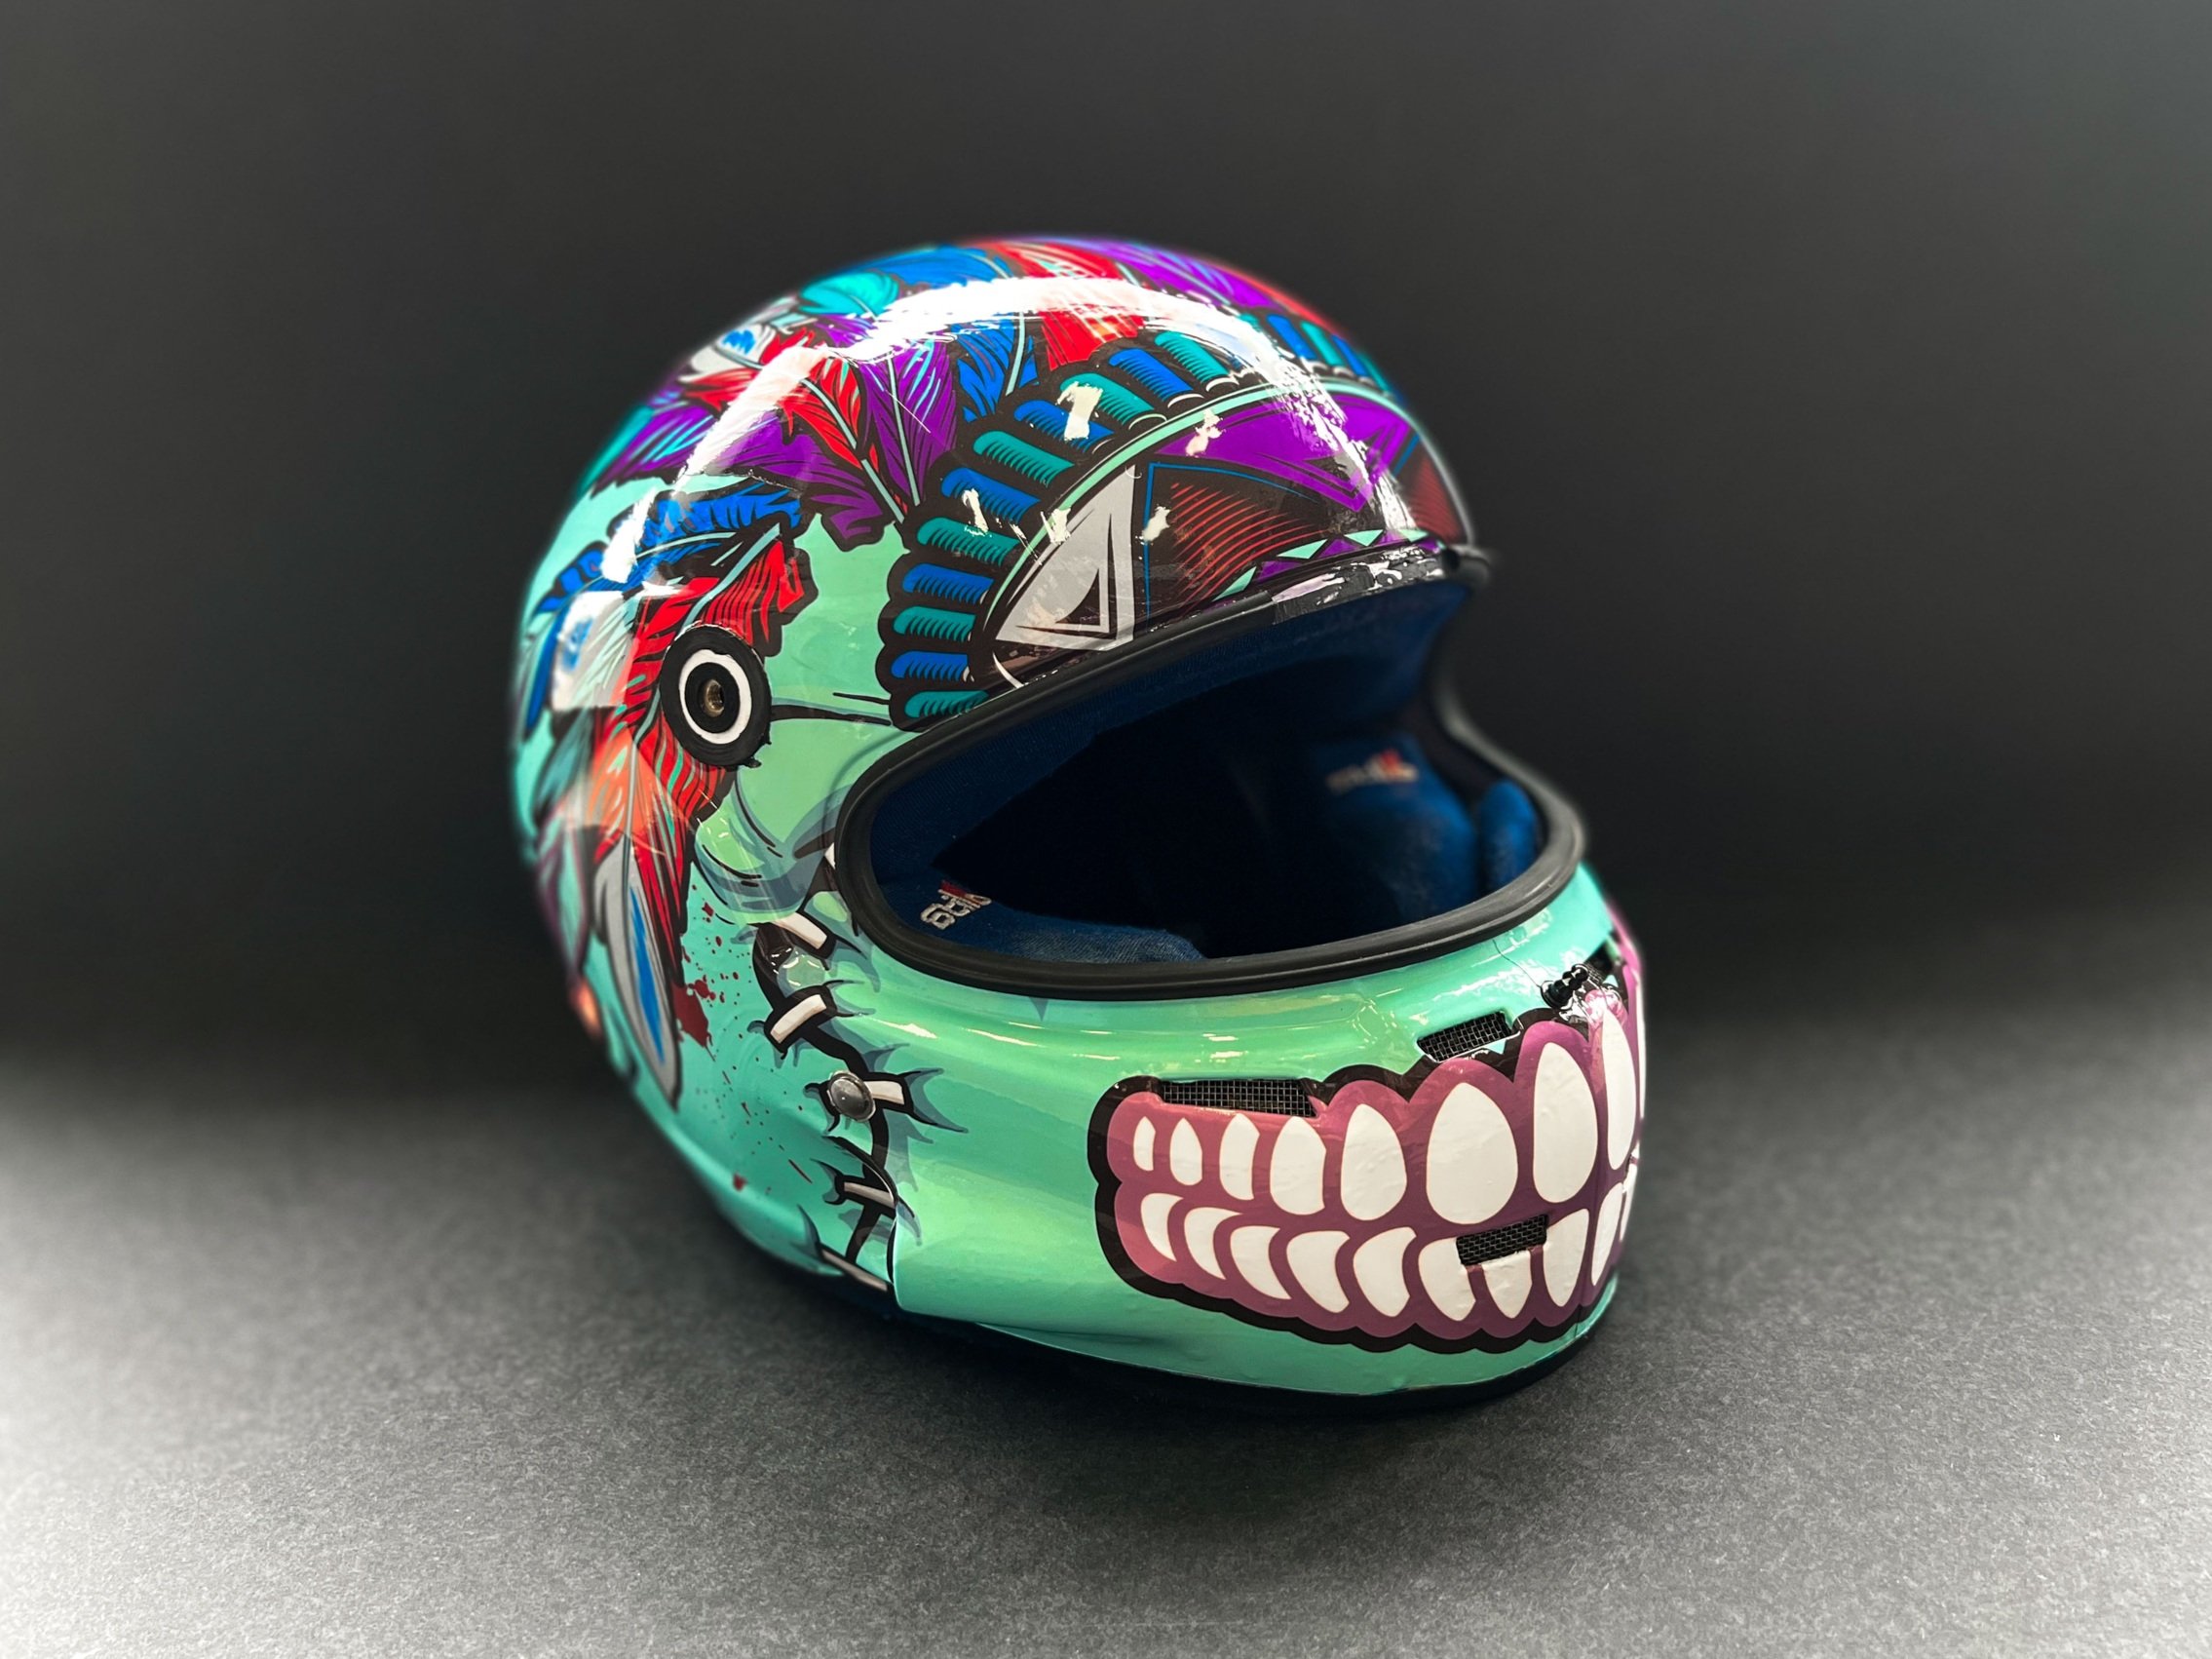 custom-helmet-wraps-dewraps-com-new-site